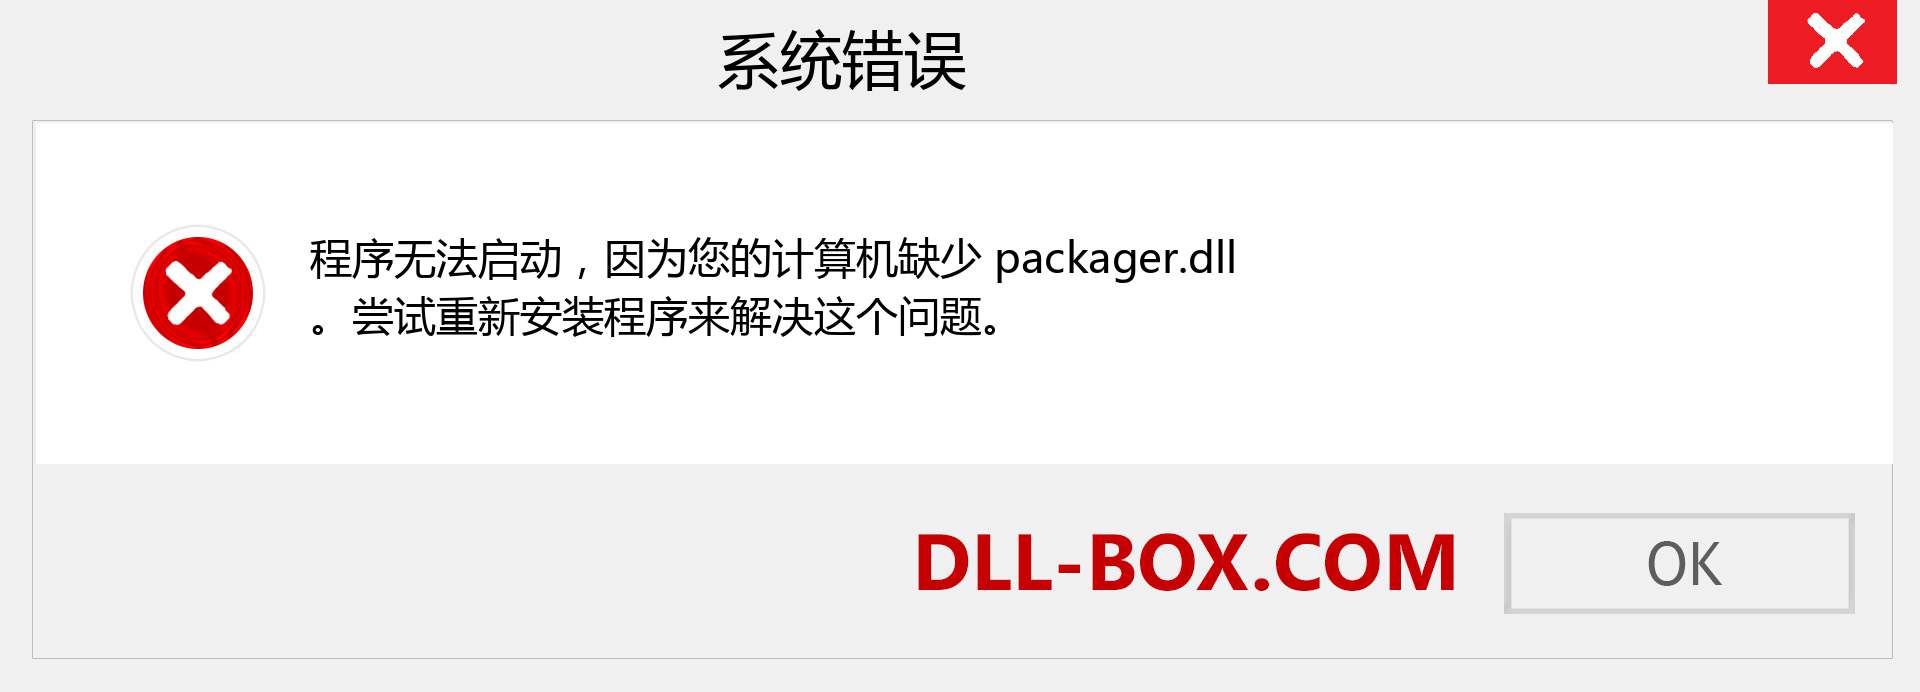 packager.dll 文件丢失？。 适用于 Windows 7、8、10 的下载 - 修复 Windows、照片、图像上的 packager dll 丢失错误